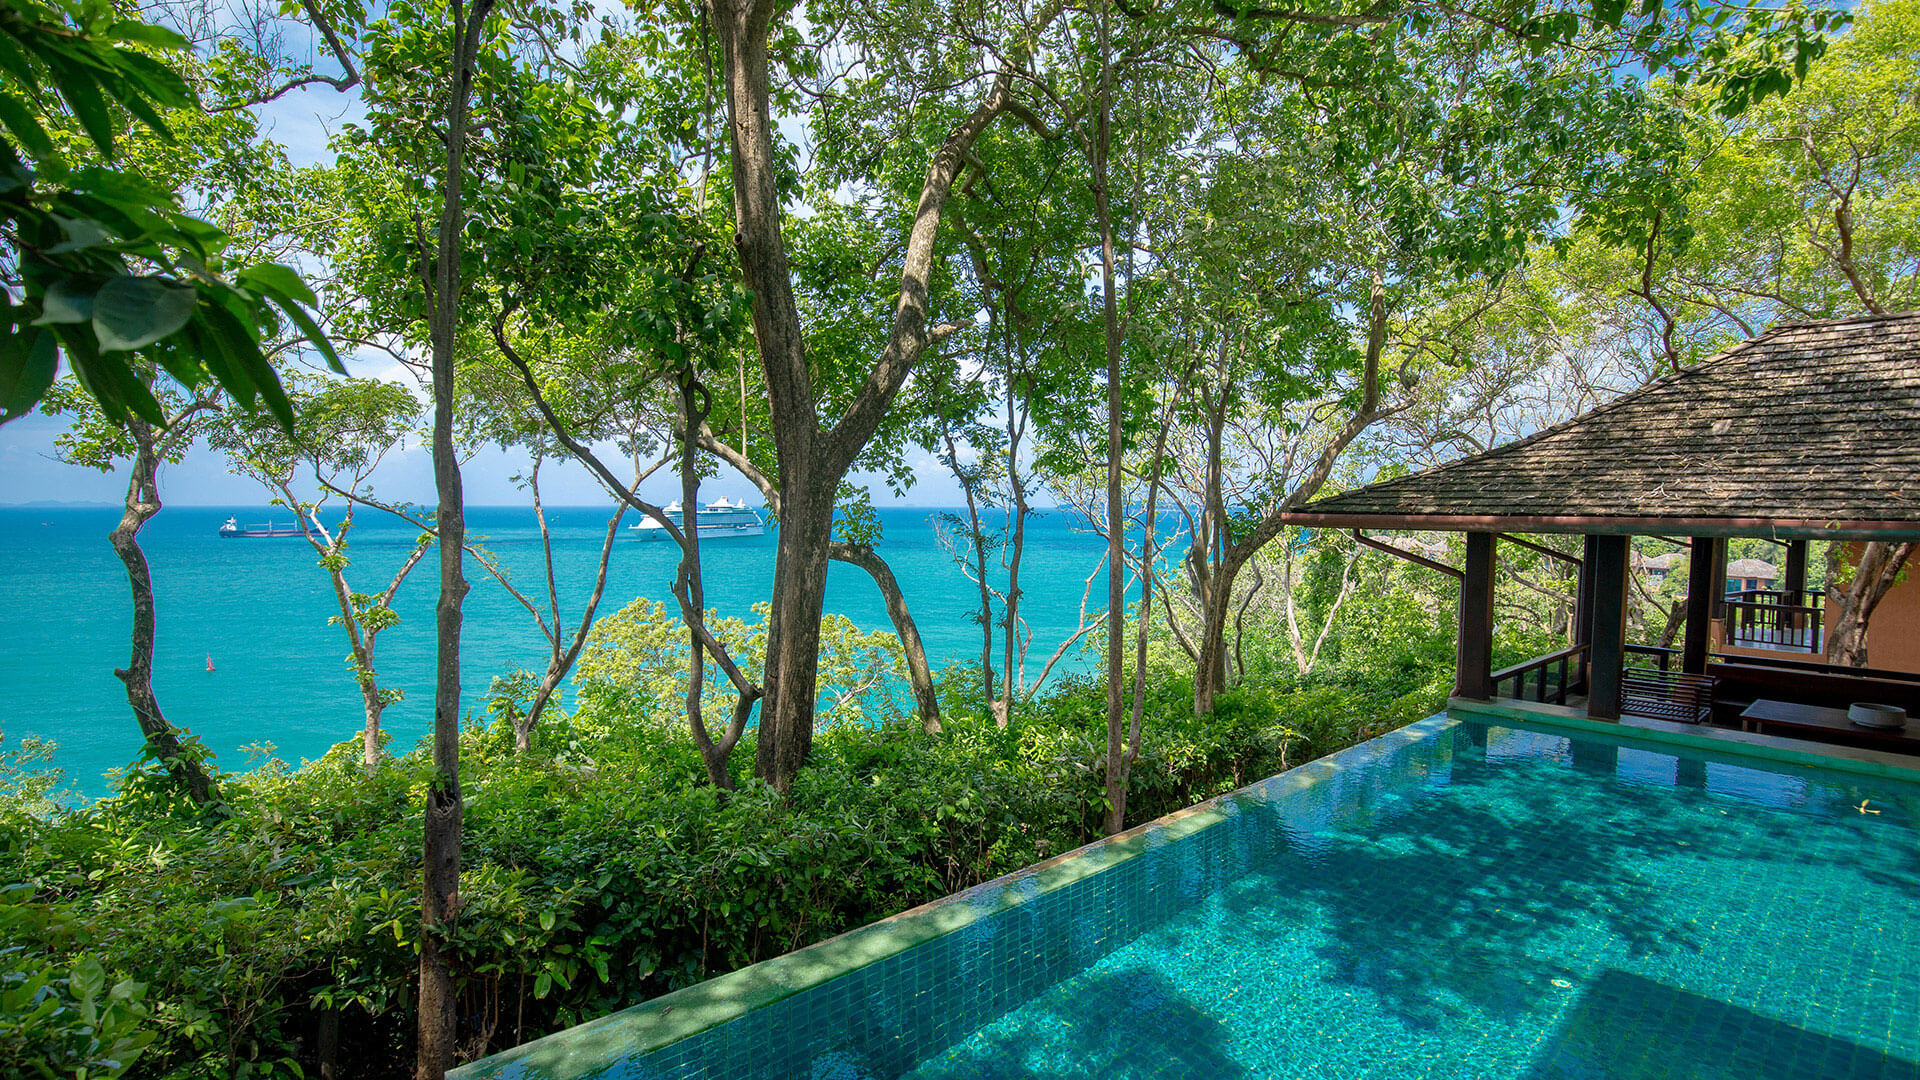 3 bedroom residence villa partial garden view luxury hotel resort phuket